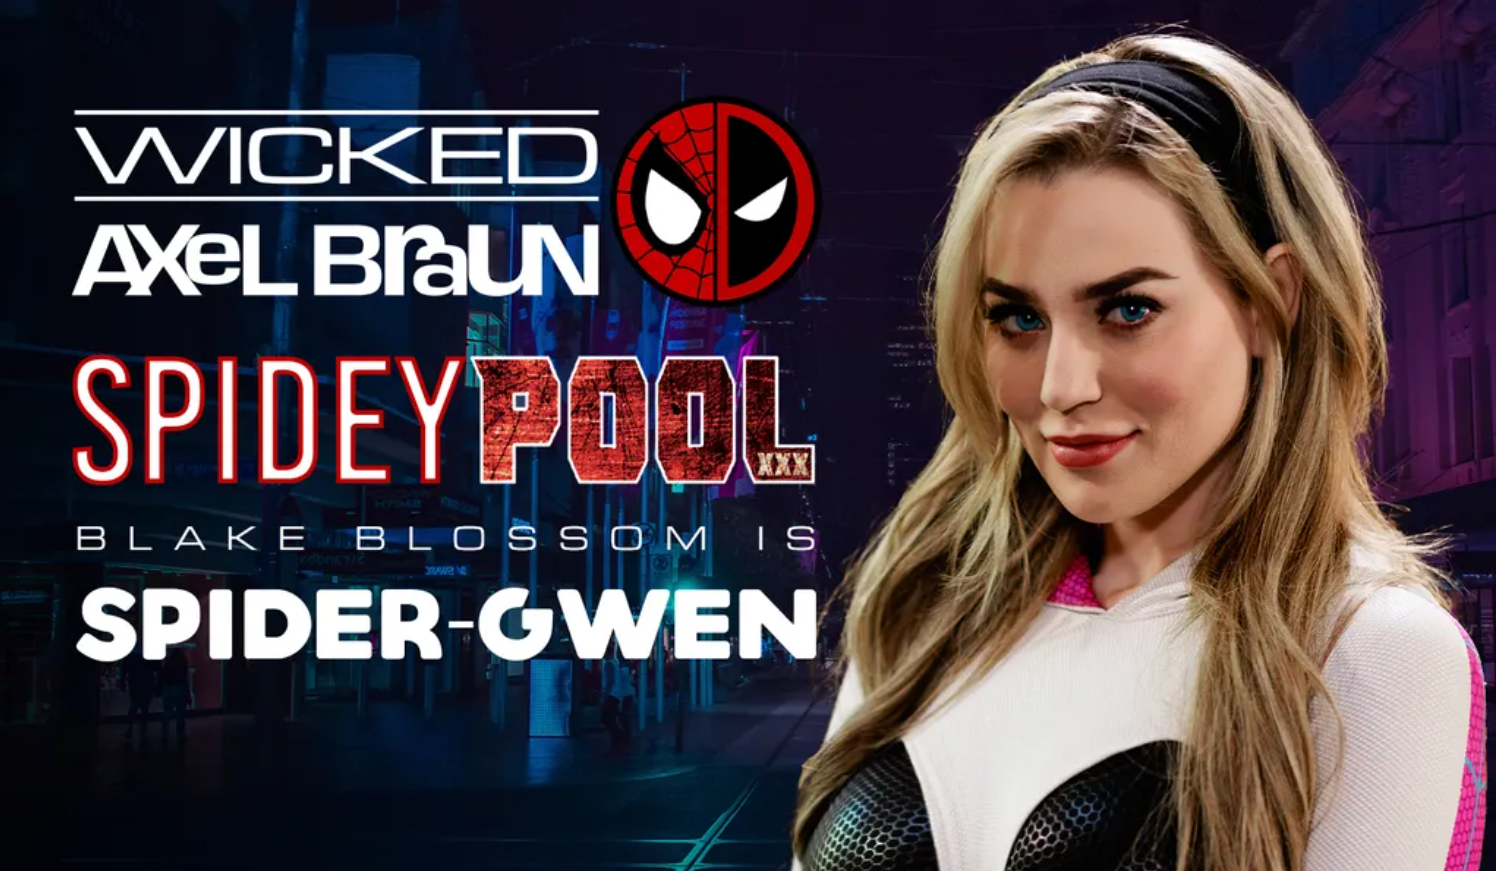 Blake Blossom Cast As Spider-Gwen in Latest Axel Braun Parody